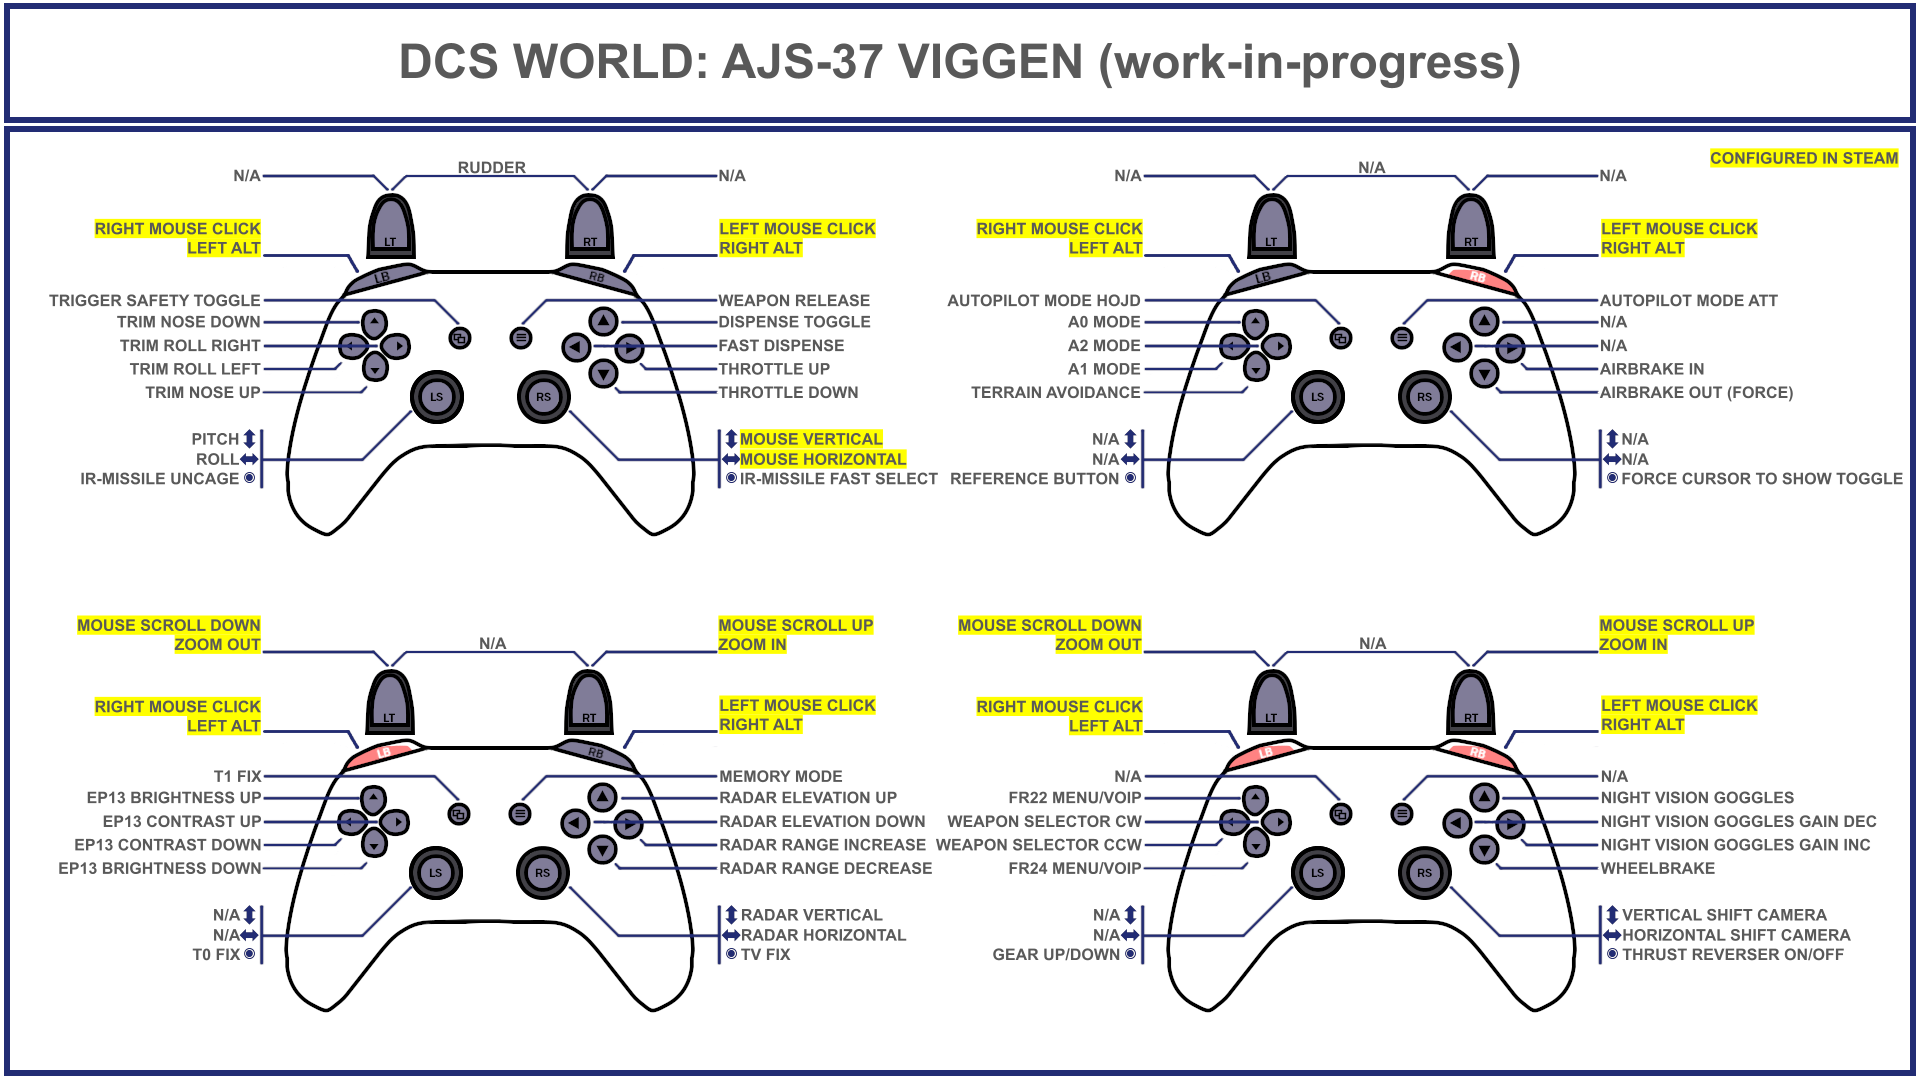 Tuuvas' Official AJS-37 Viggen (work-in-progress) Gamepad Controller Layout